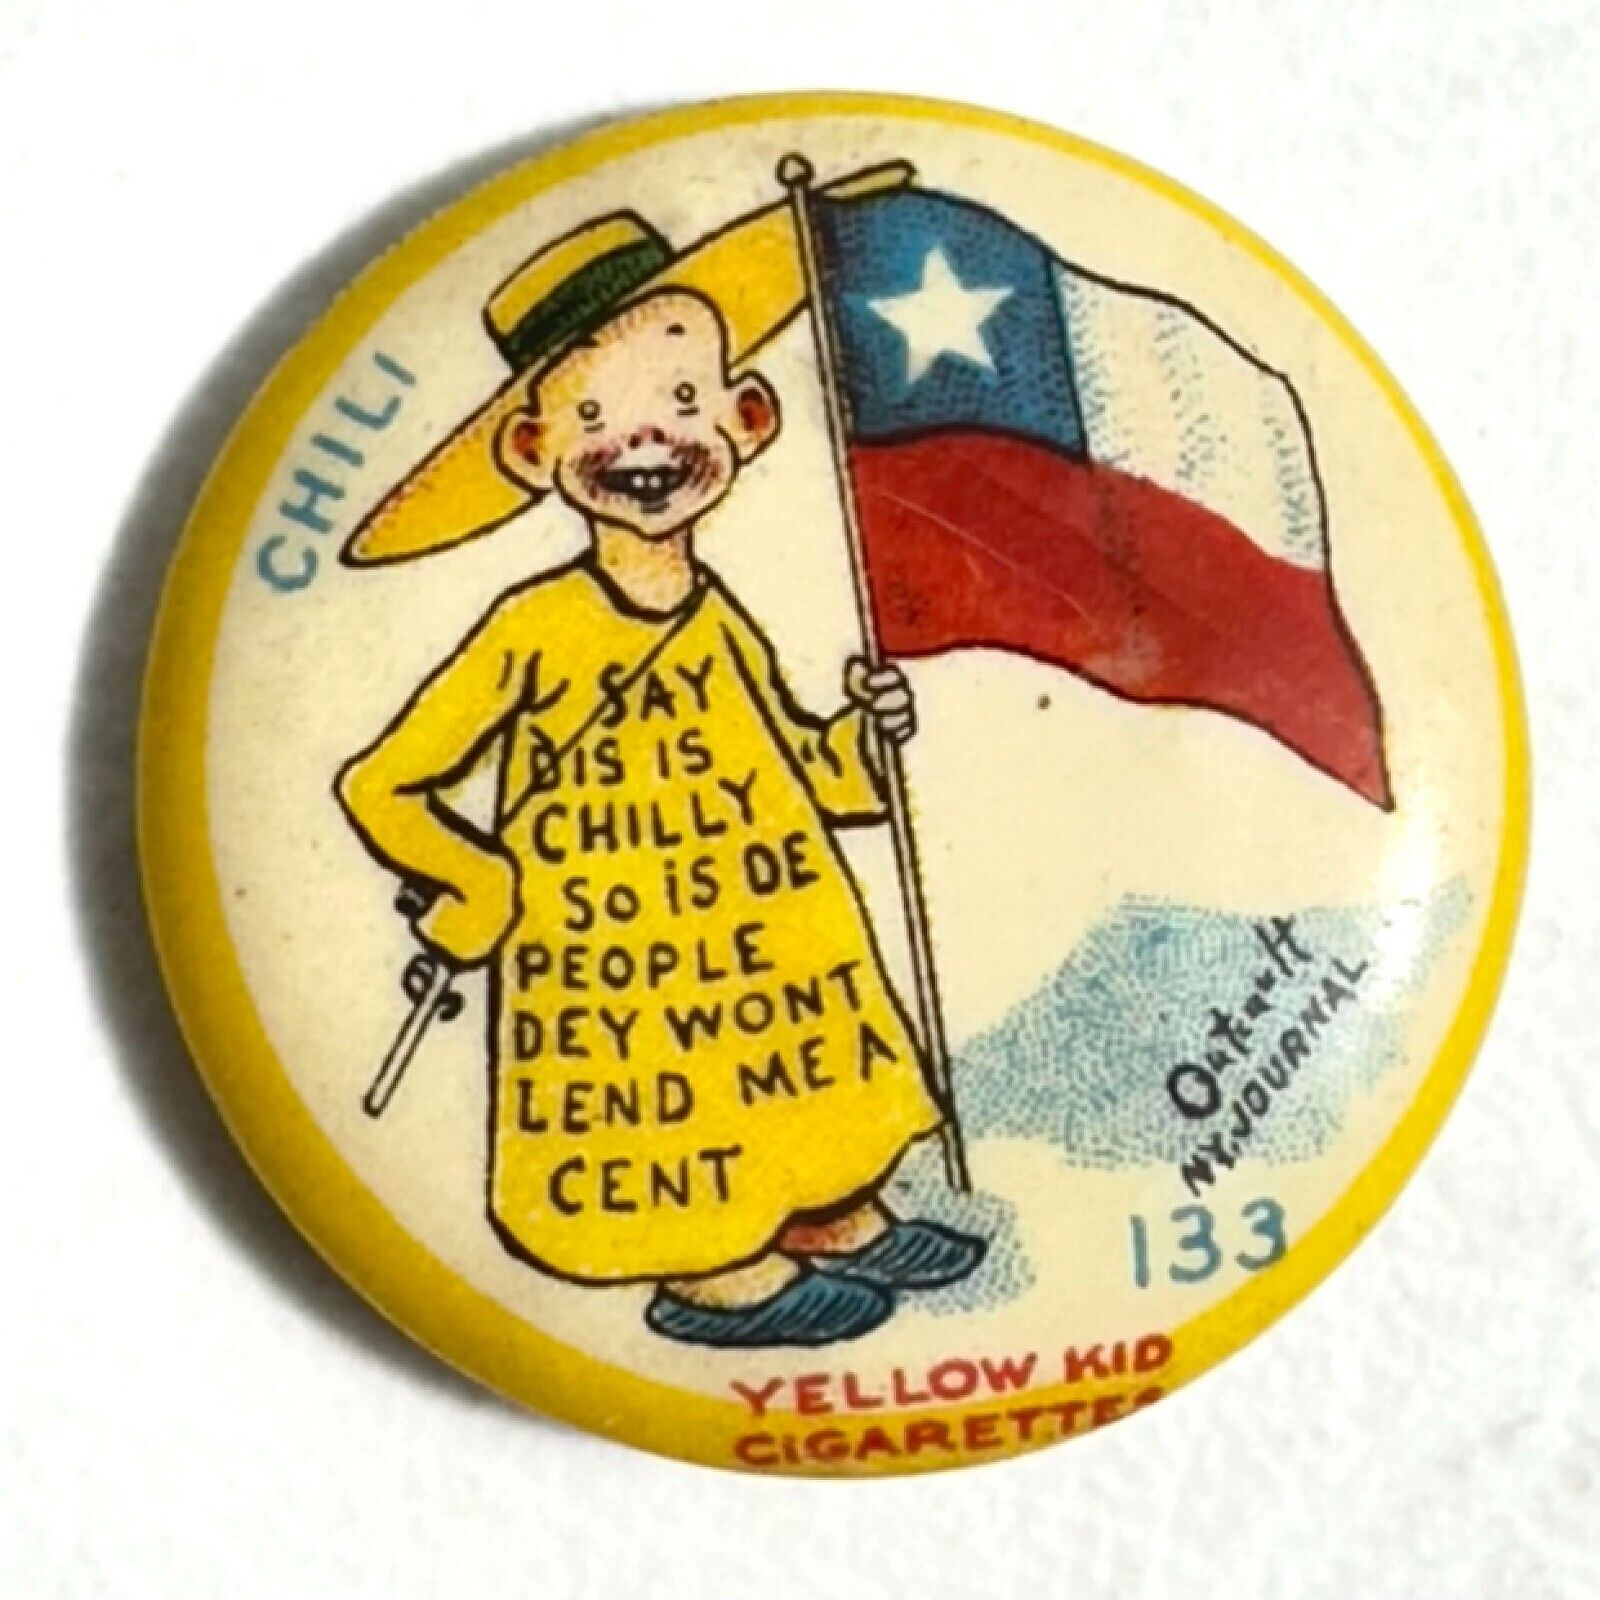 1896 YELLOW KID High Admiral Cigarettes PIN BACK #133 Outcault CHILI FLAG